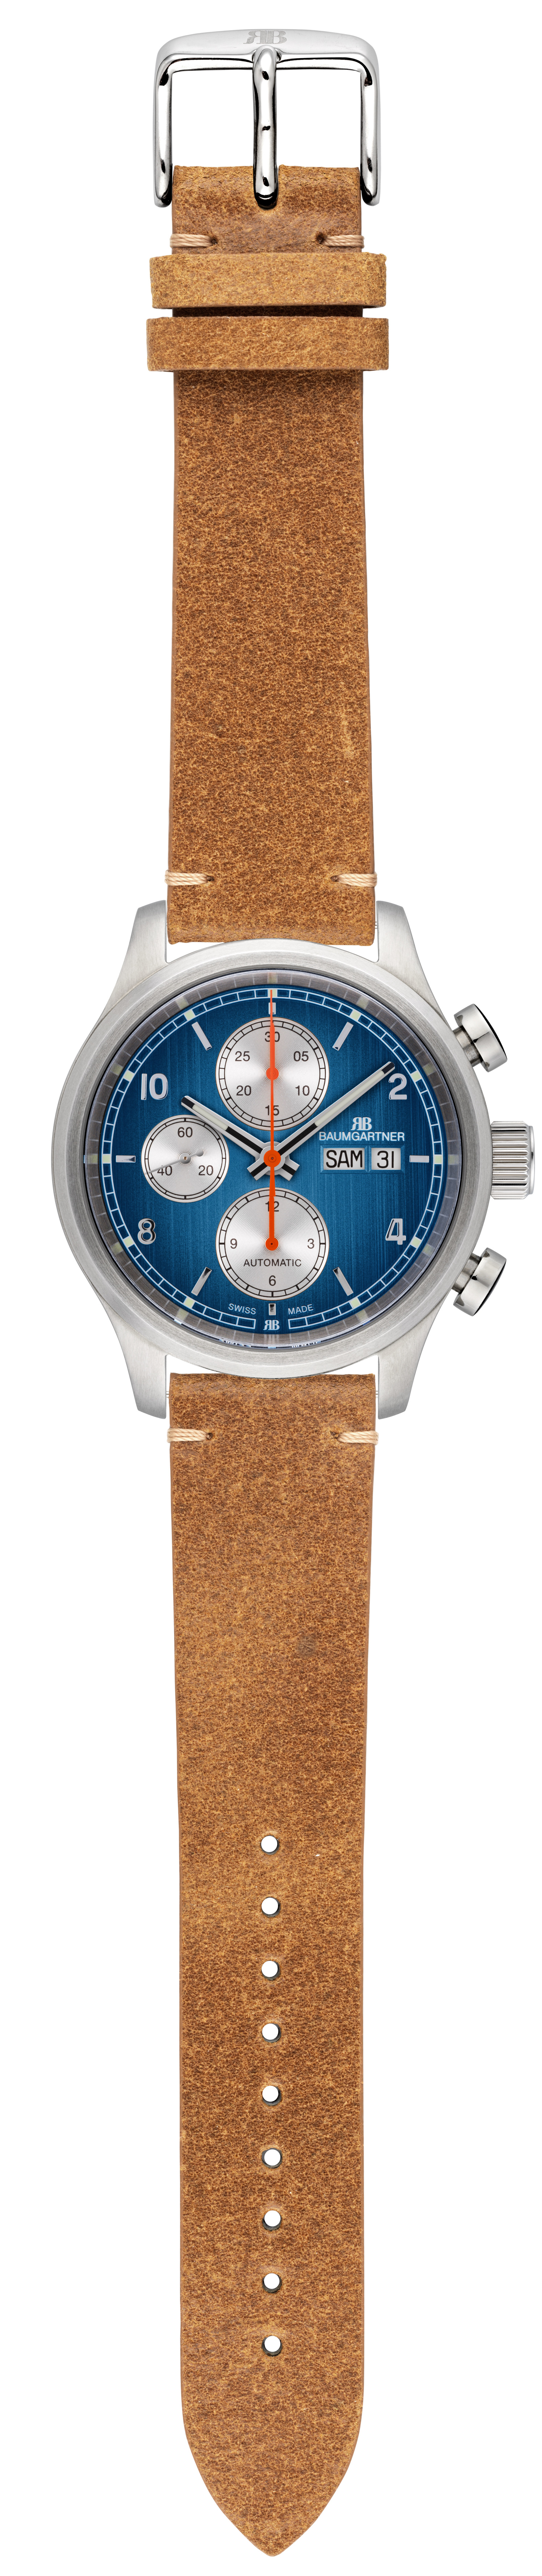 Vintage FRONTENAC men's manual winding watch Date Baumgartner 866 swiss  1970s | eBay